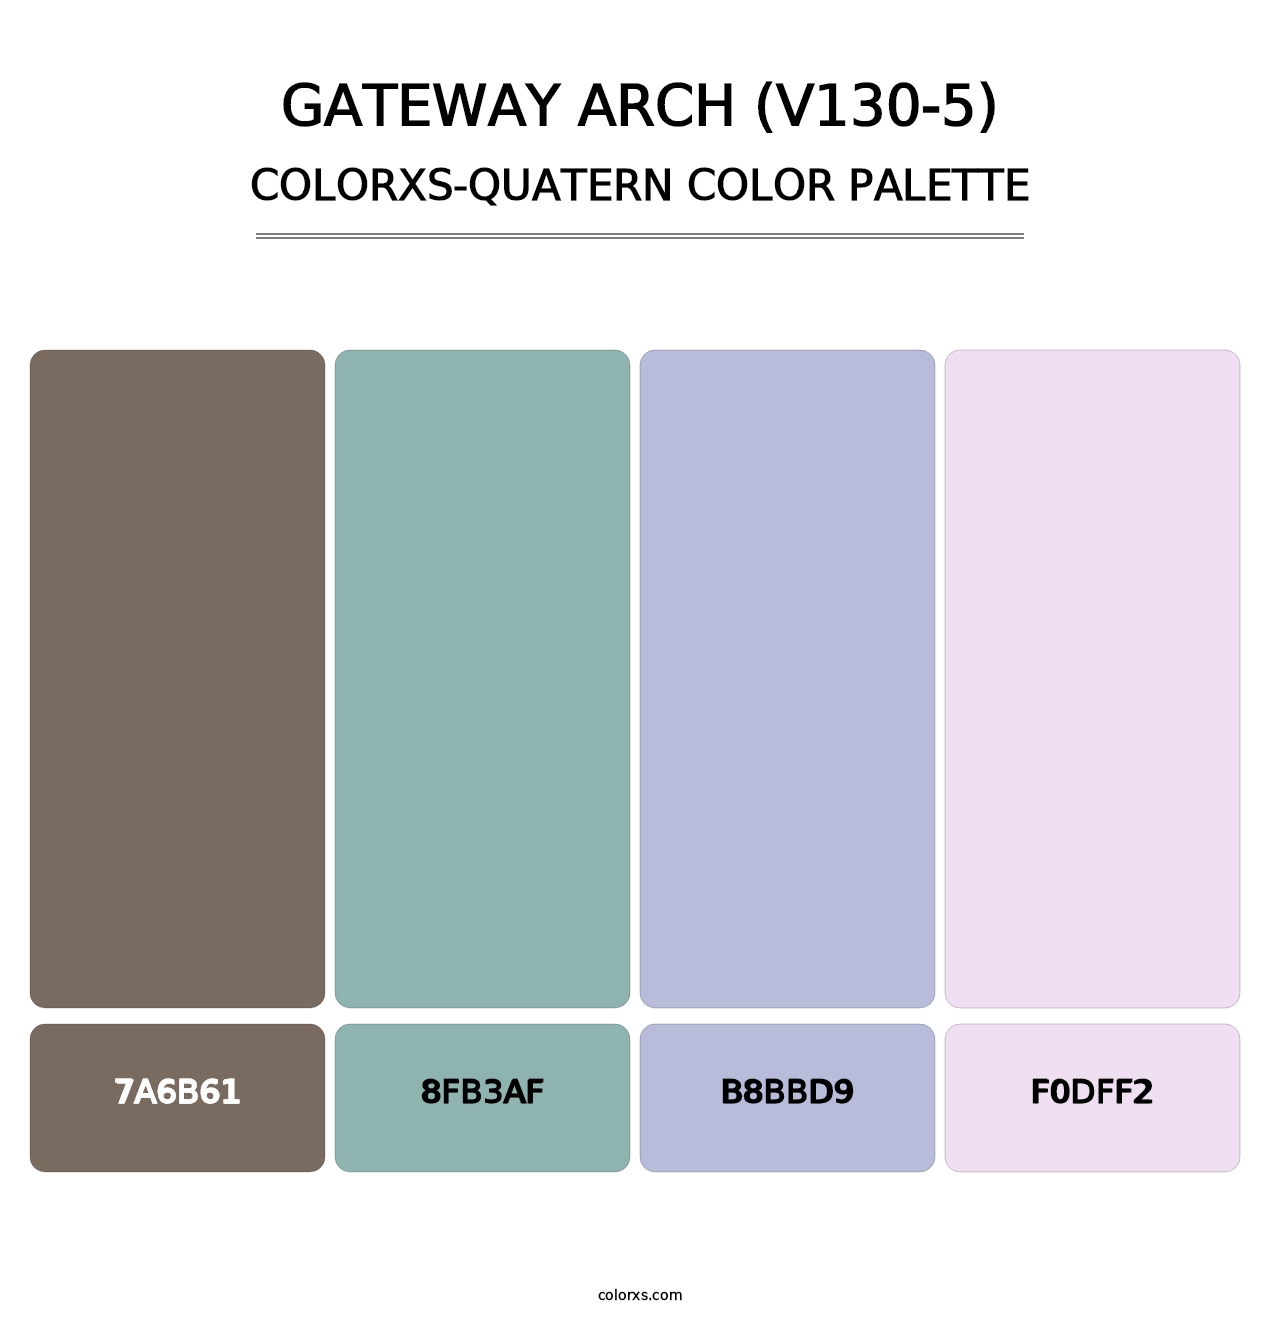 Gateway Arch (V130-5) - Colorxs Quatern Palette